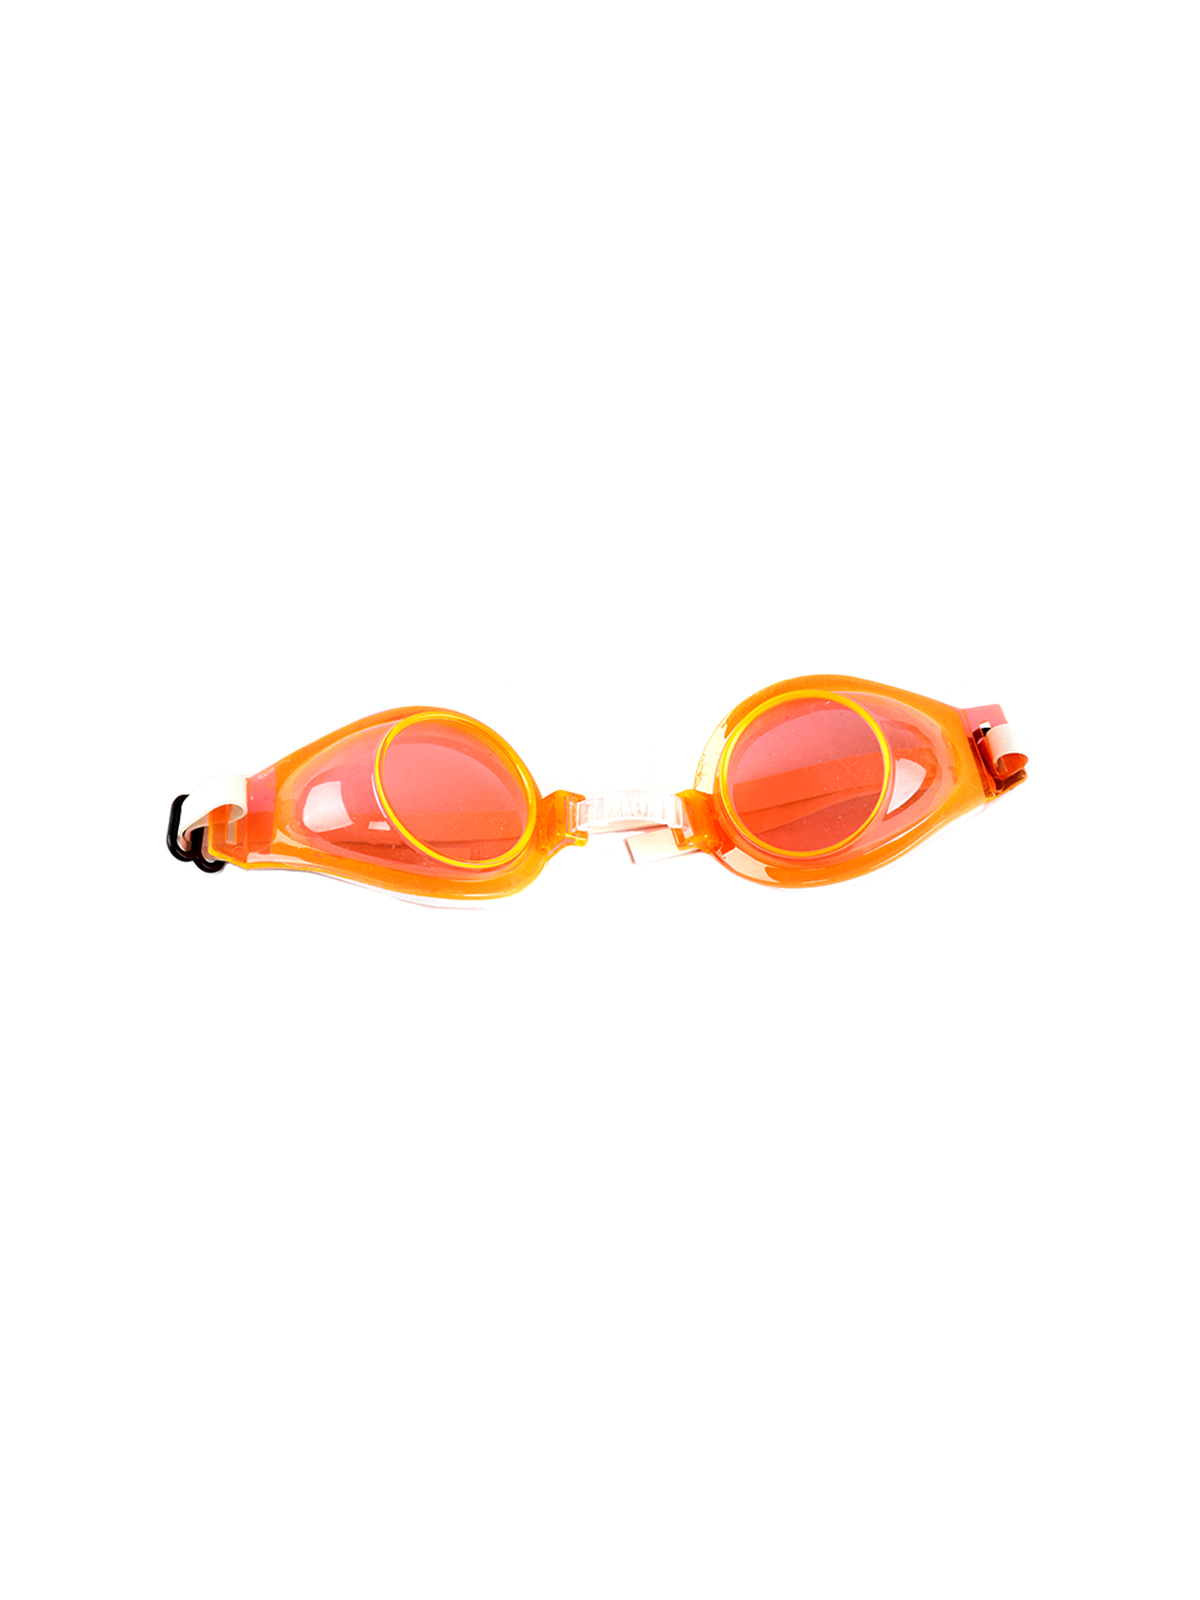 Очки для плавания + заглушки для ушей, 16 см, пластик, блистер, в асс-те